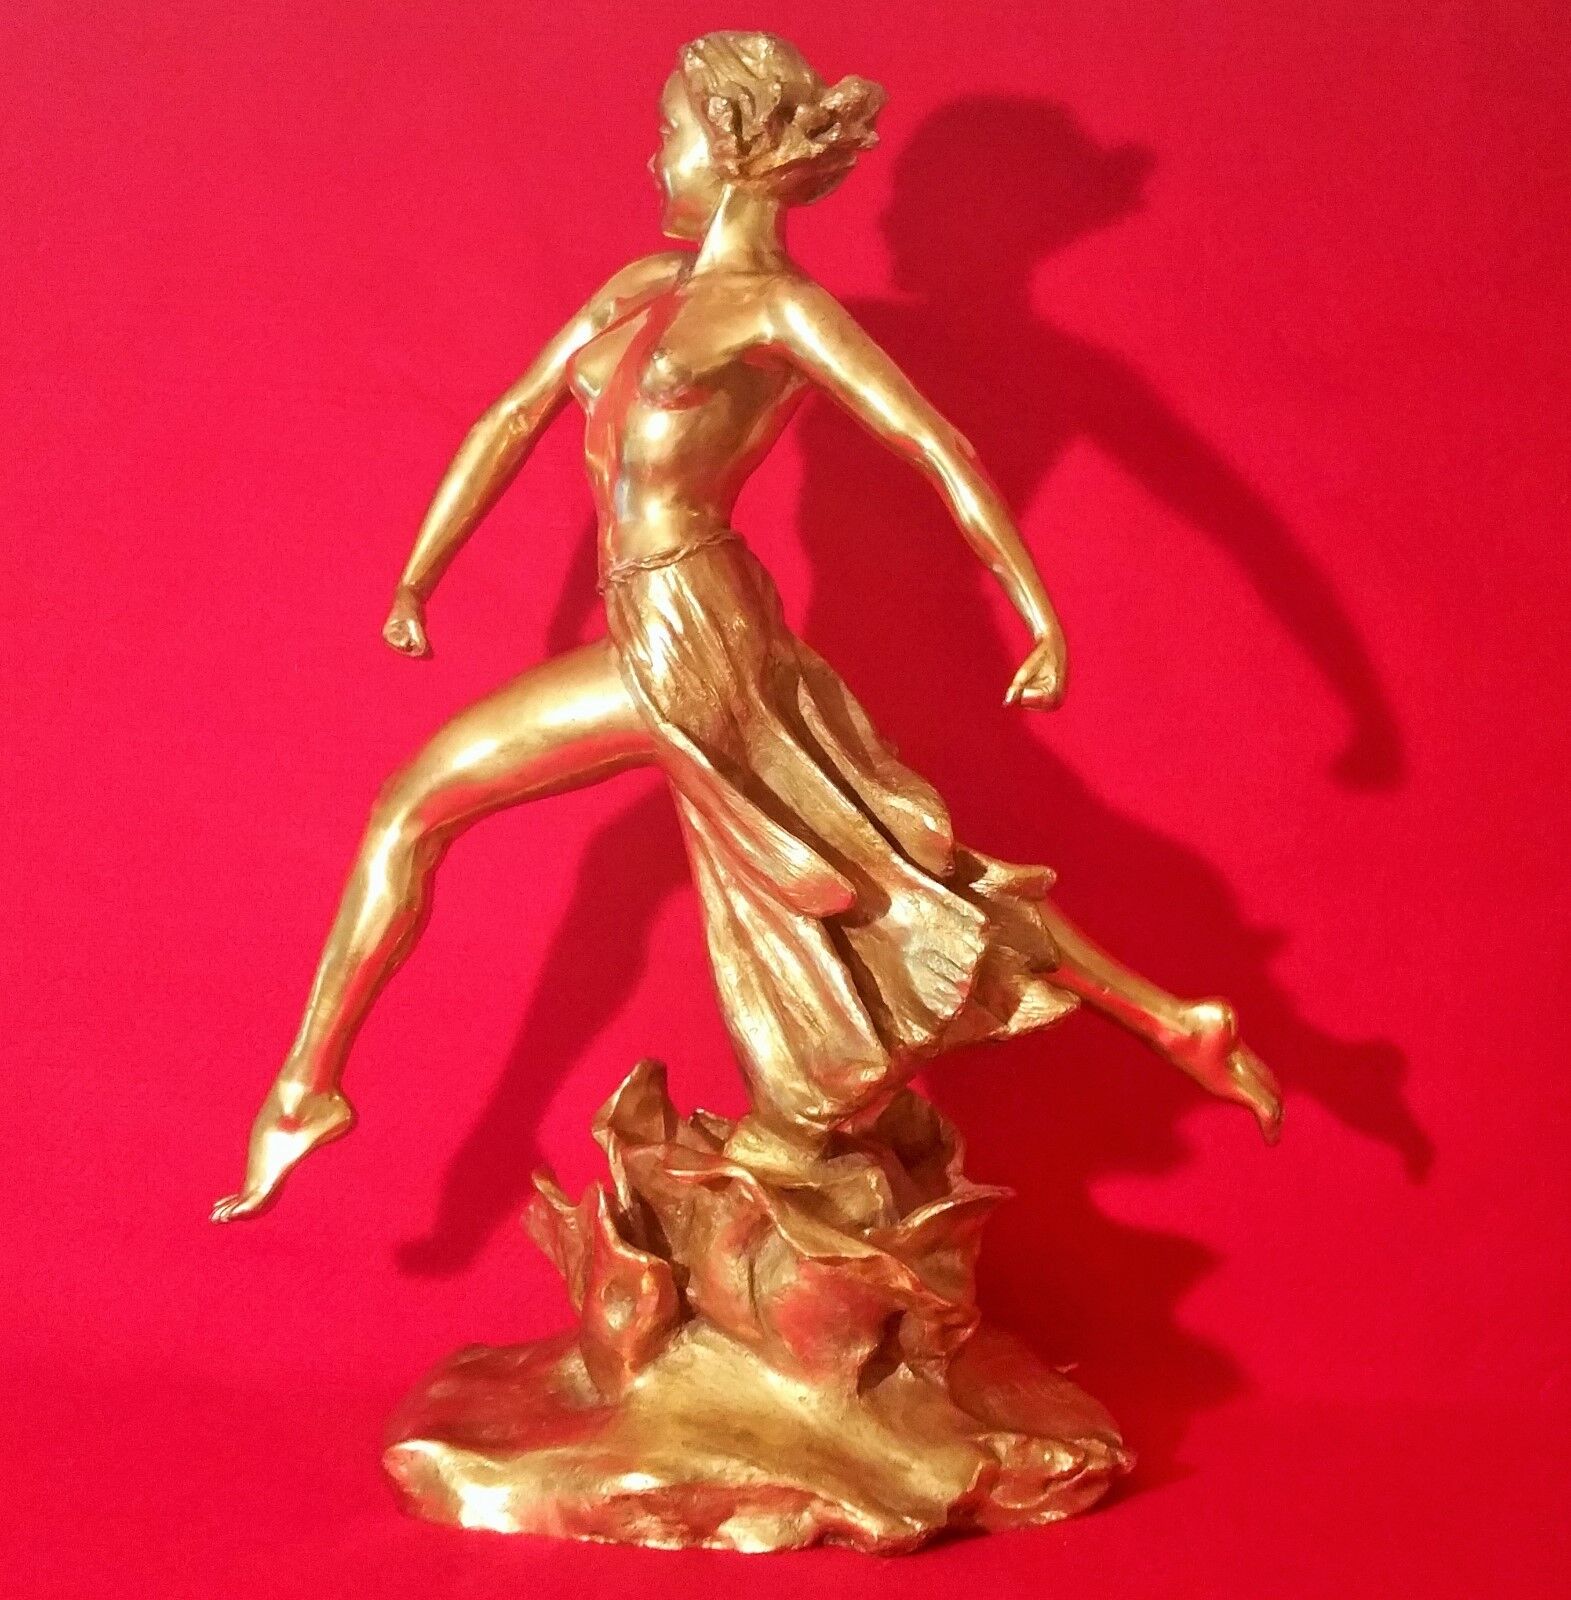 NYC BALLET vtg gold bronze statue female nude dancer stage theater art sculpture